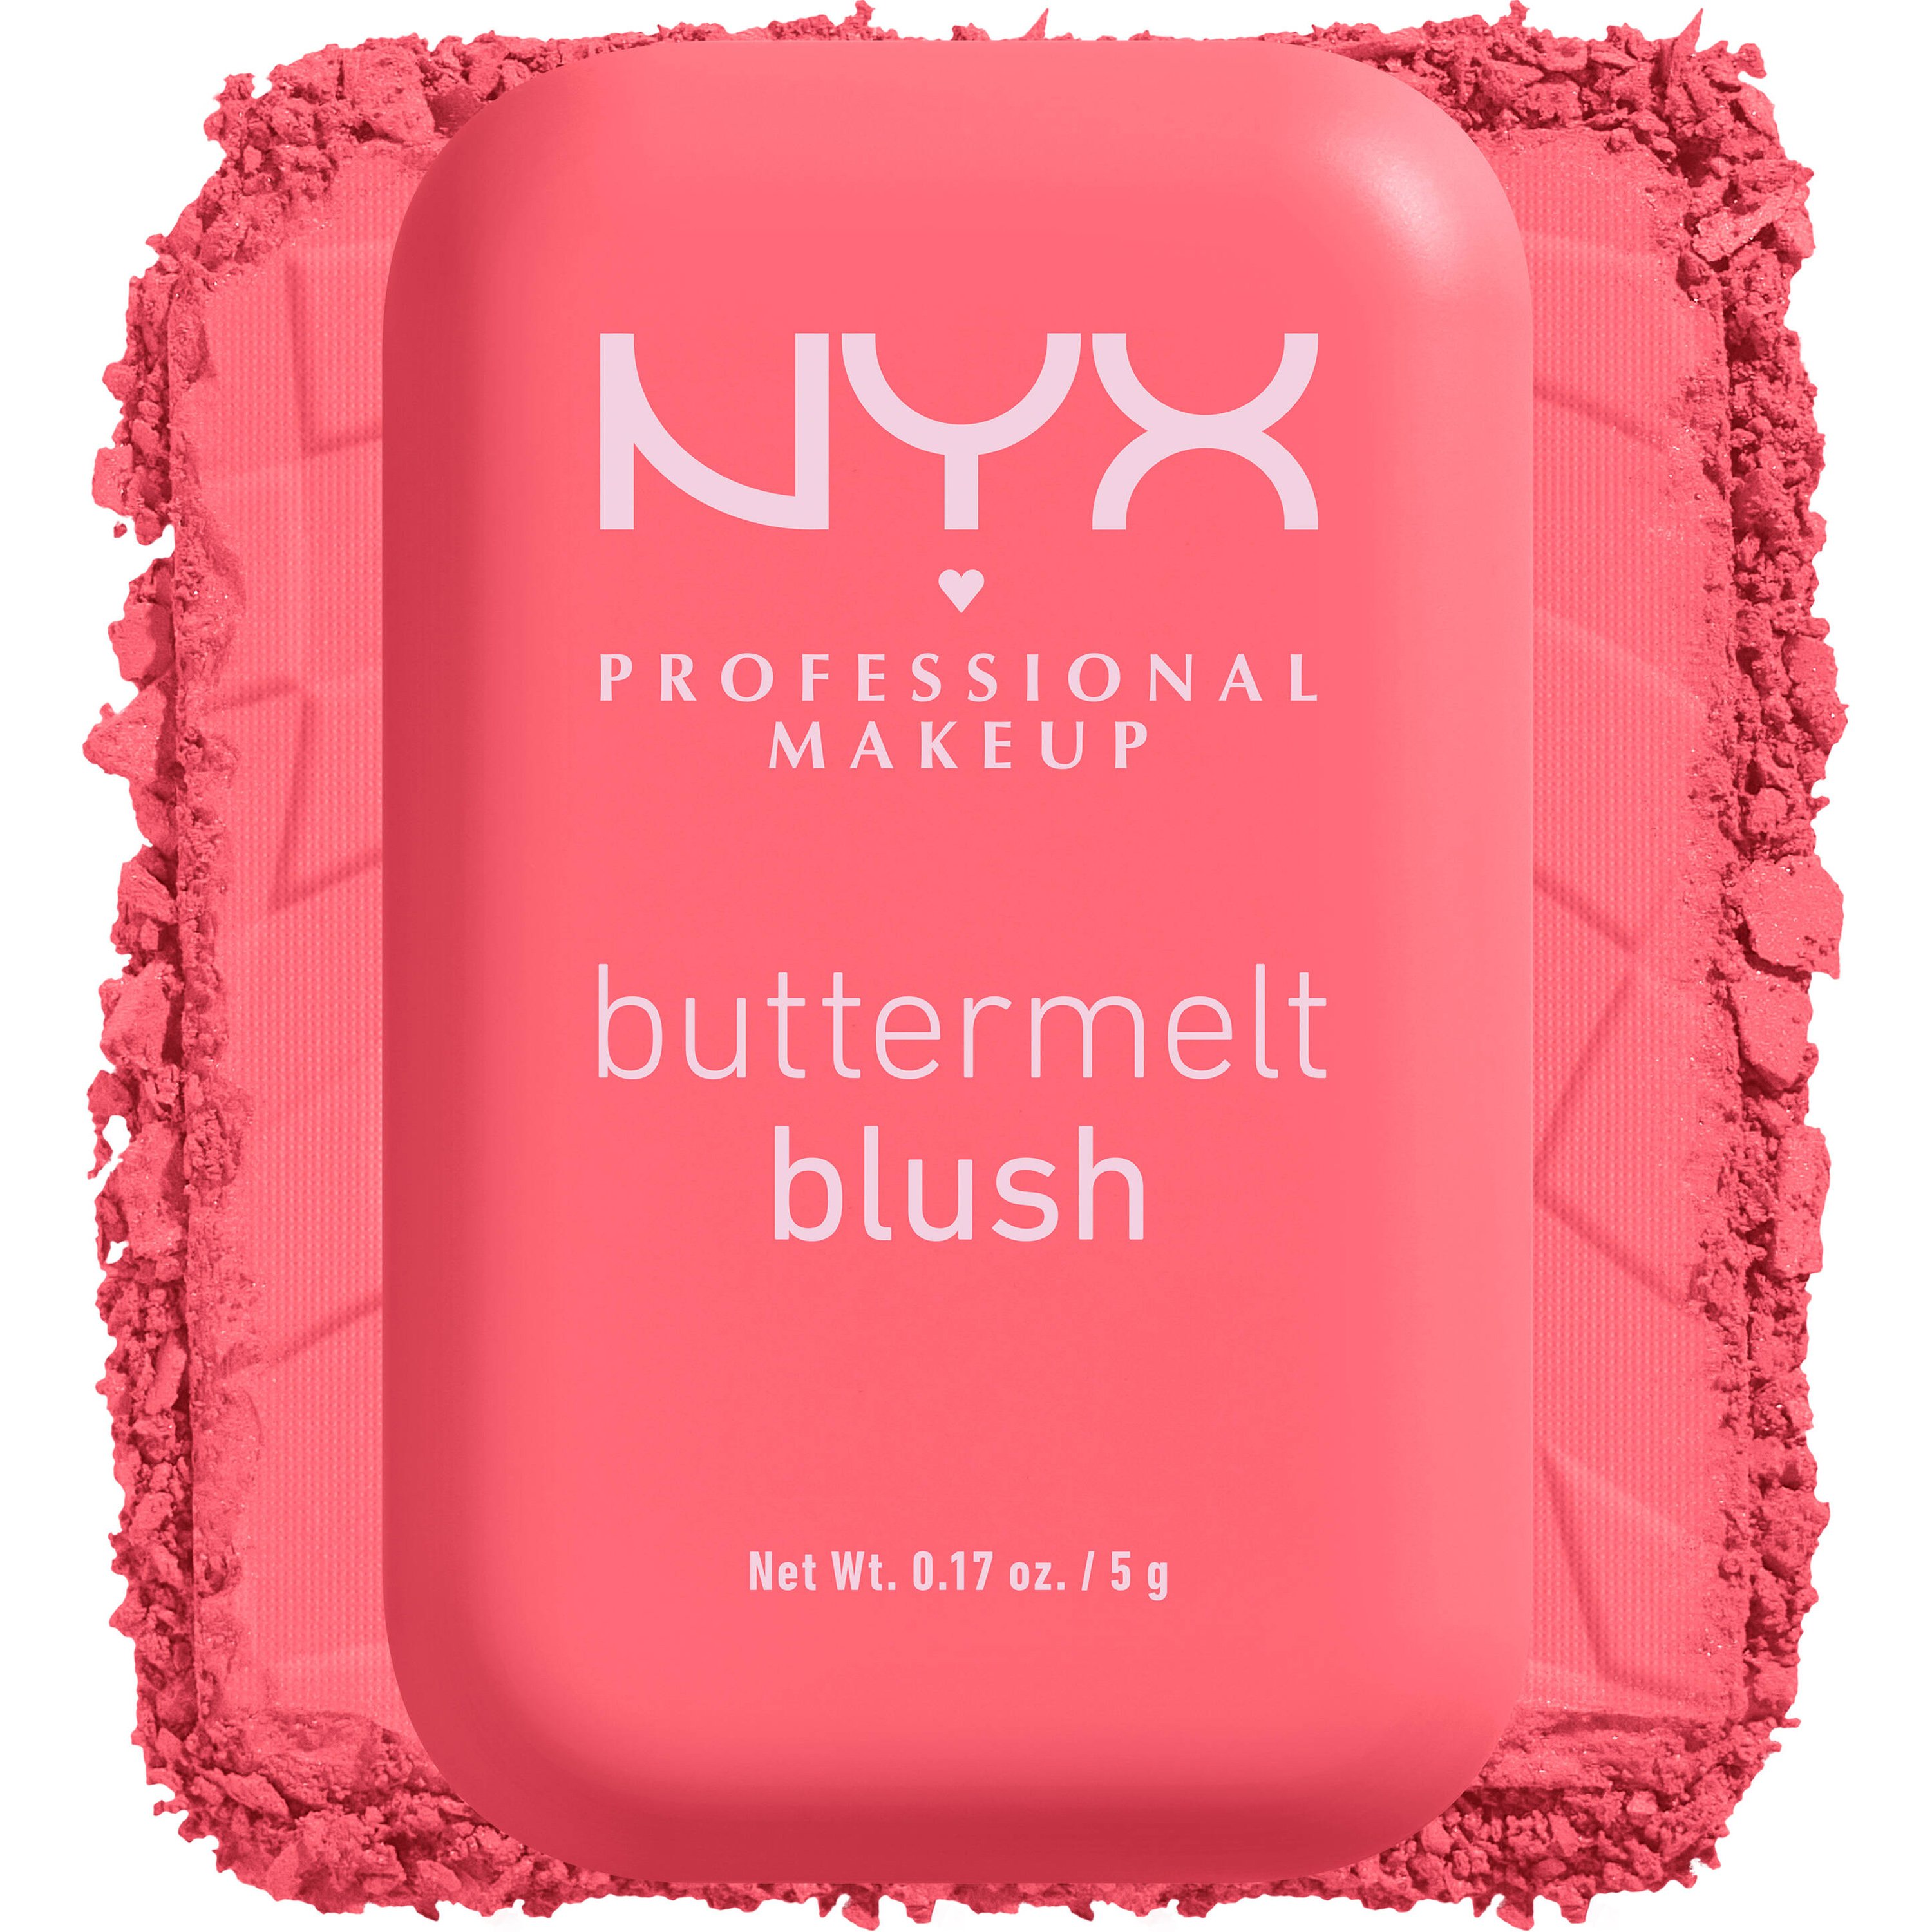 Nyx Professional Makeup Buttermelt Blush Ρουζ με Έντονο Χρώμα & Λαμπερό Τελείωμα, Shimmering Coral 5g - U Know Butta